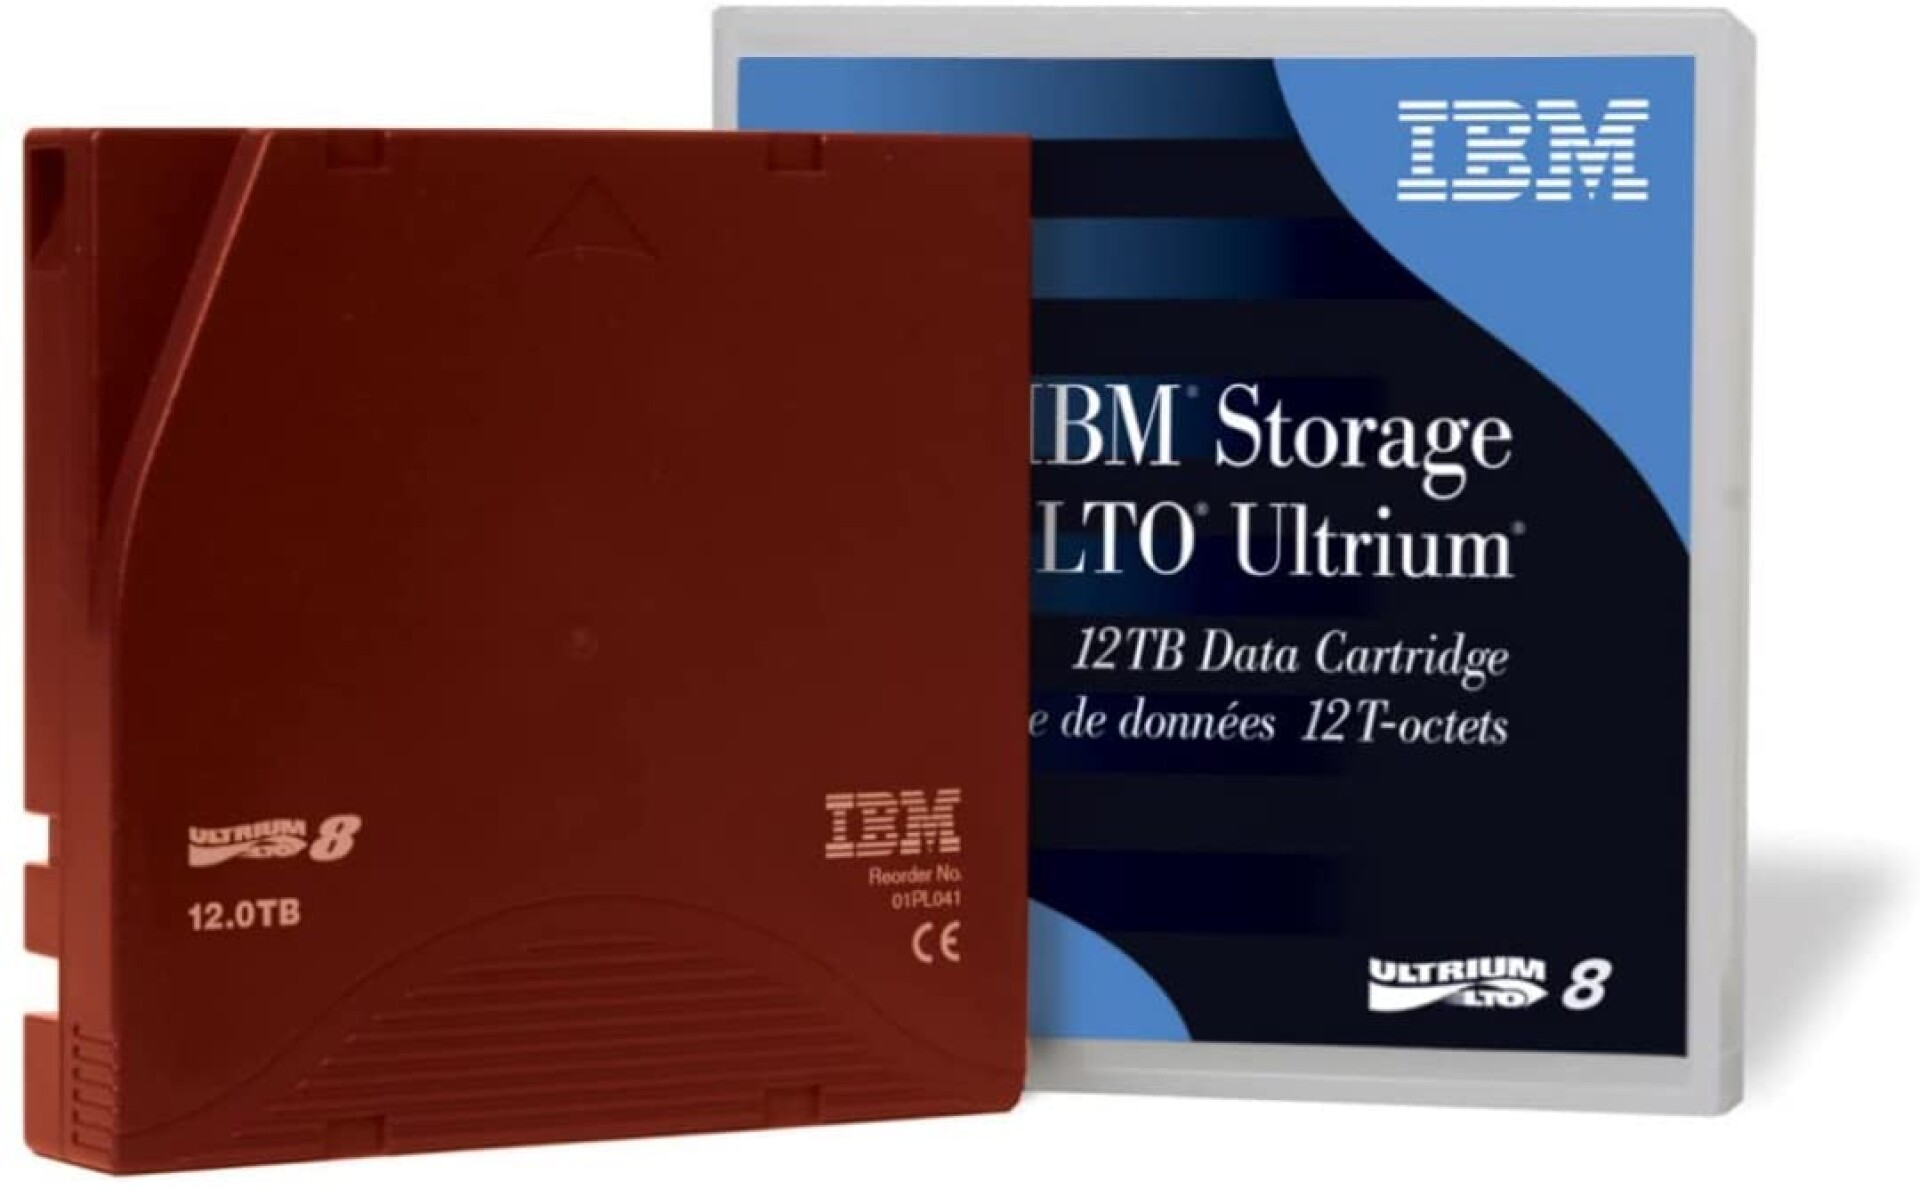 IBM CINTA ULTRIUM LTO 8 01PL041 12/30TB - Ibm Cinta Ultrium Lto 8 01pl041 12/30tb 